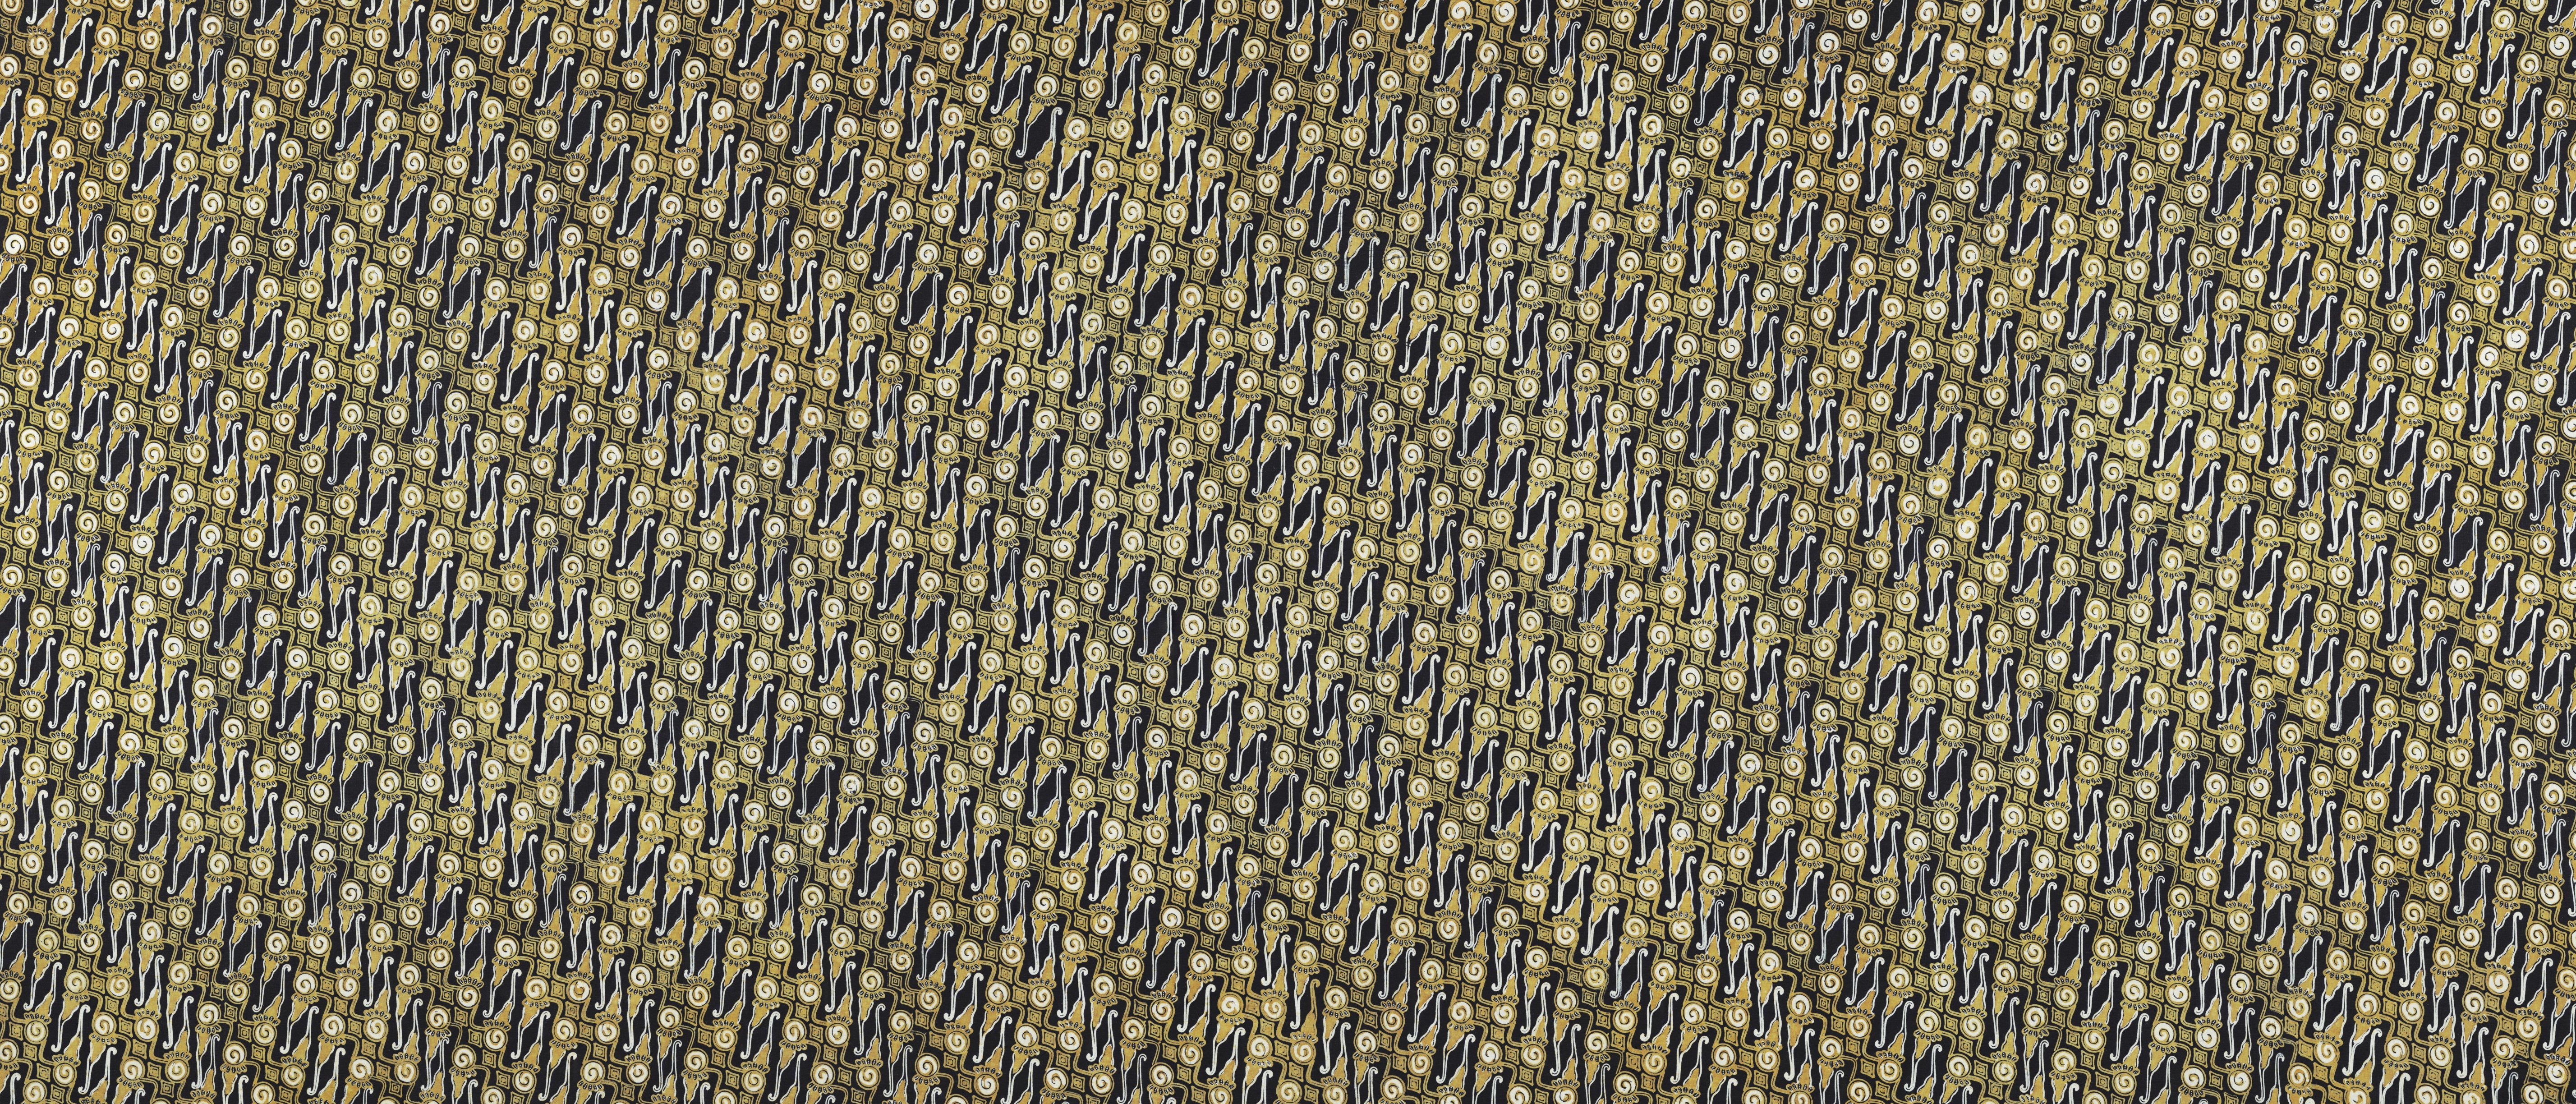 Ultra Wide Ultrawide Fabric Texture Pattern Symmetry 5712x2448